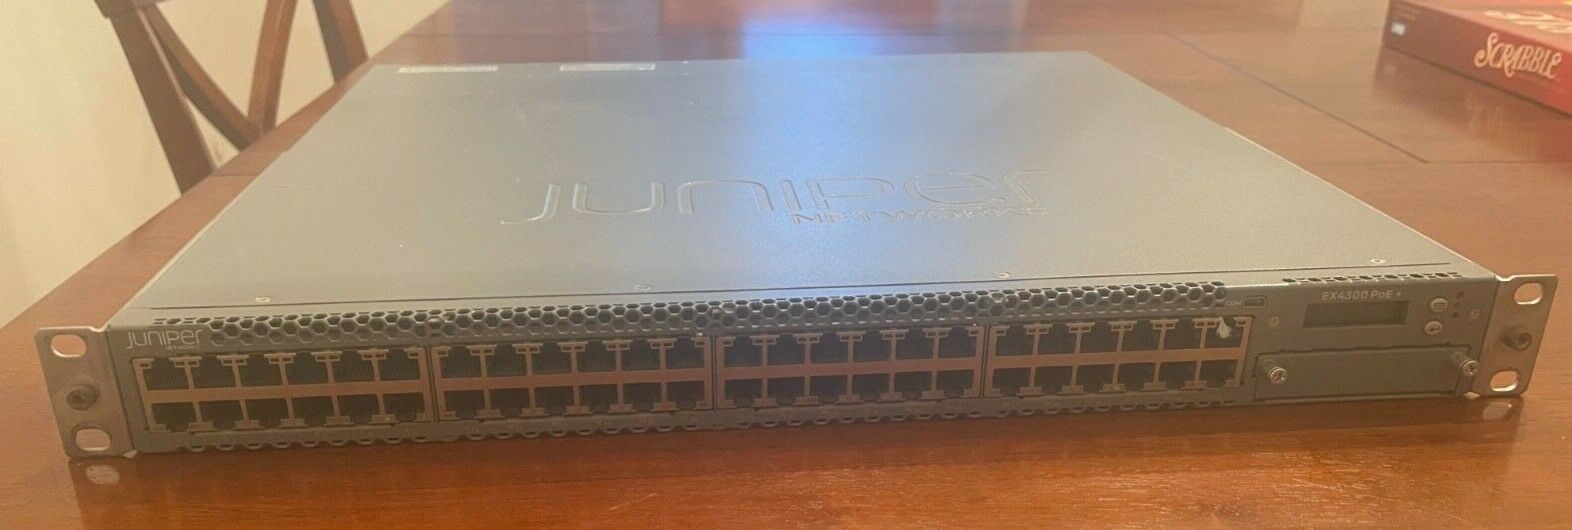 juniper ex4300-48p,Latest Junos OS, layer 3, 48 Ports, carrier grade switch